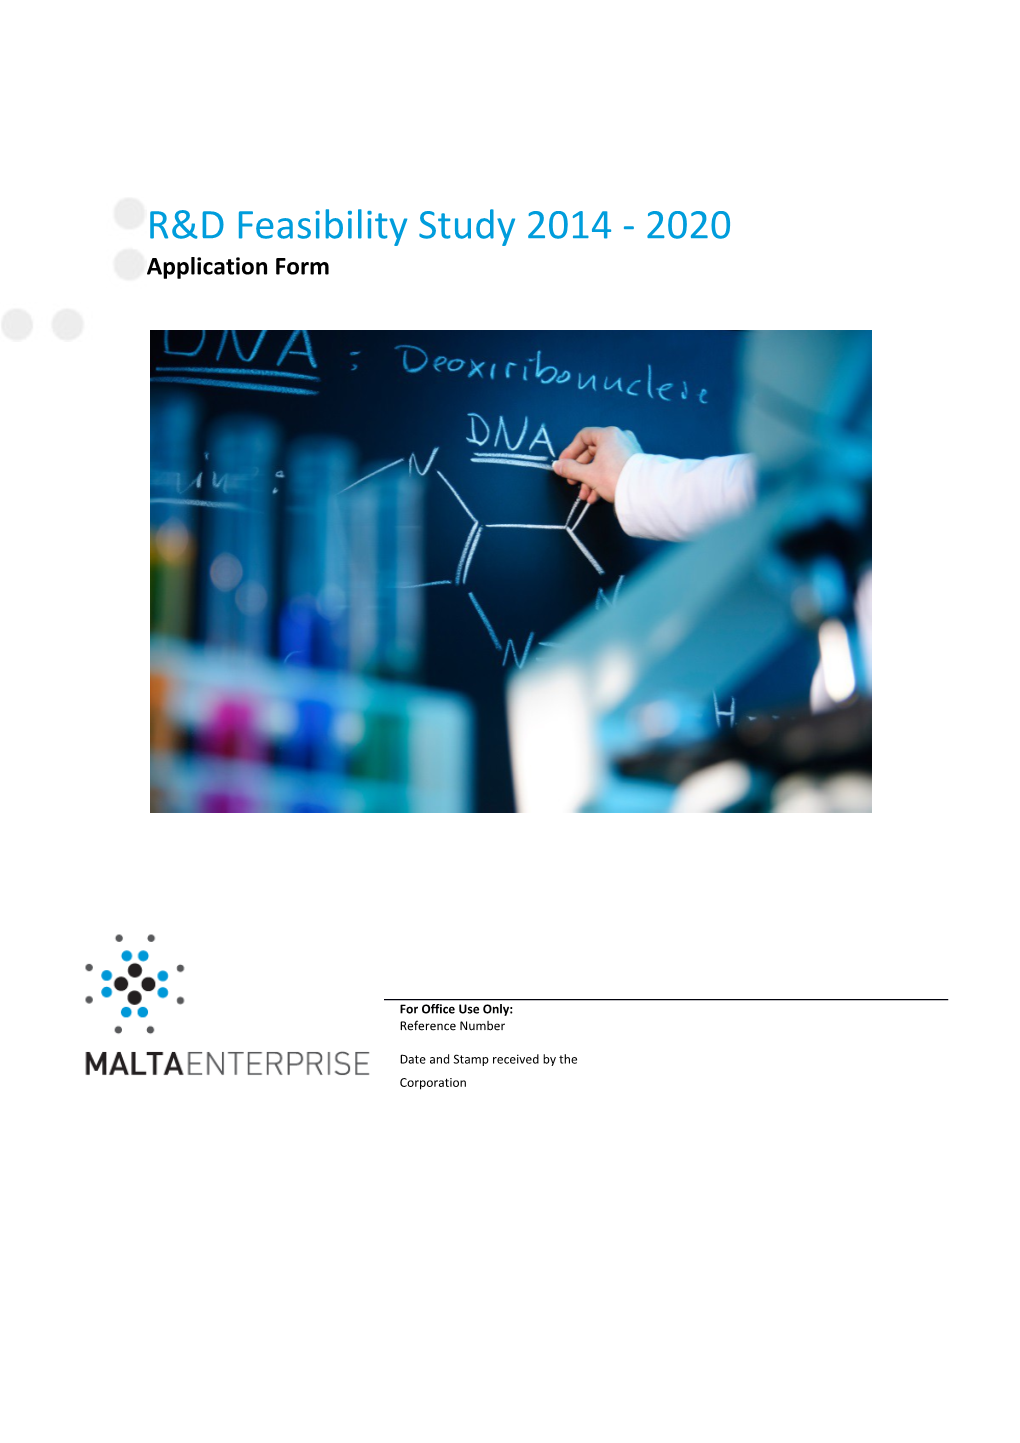 R&D Feasibility Study 2014 - 2020